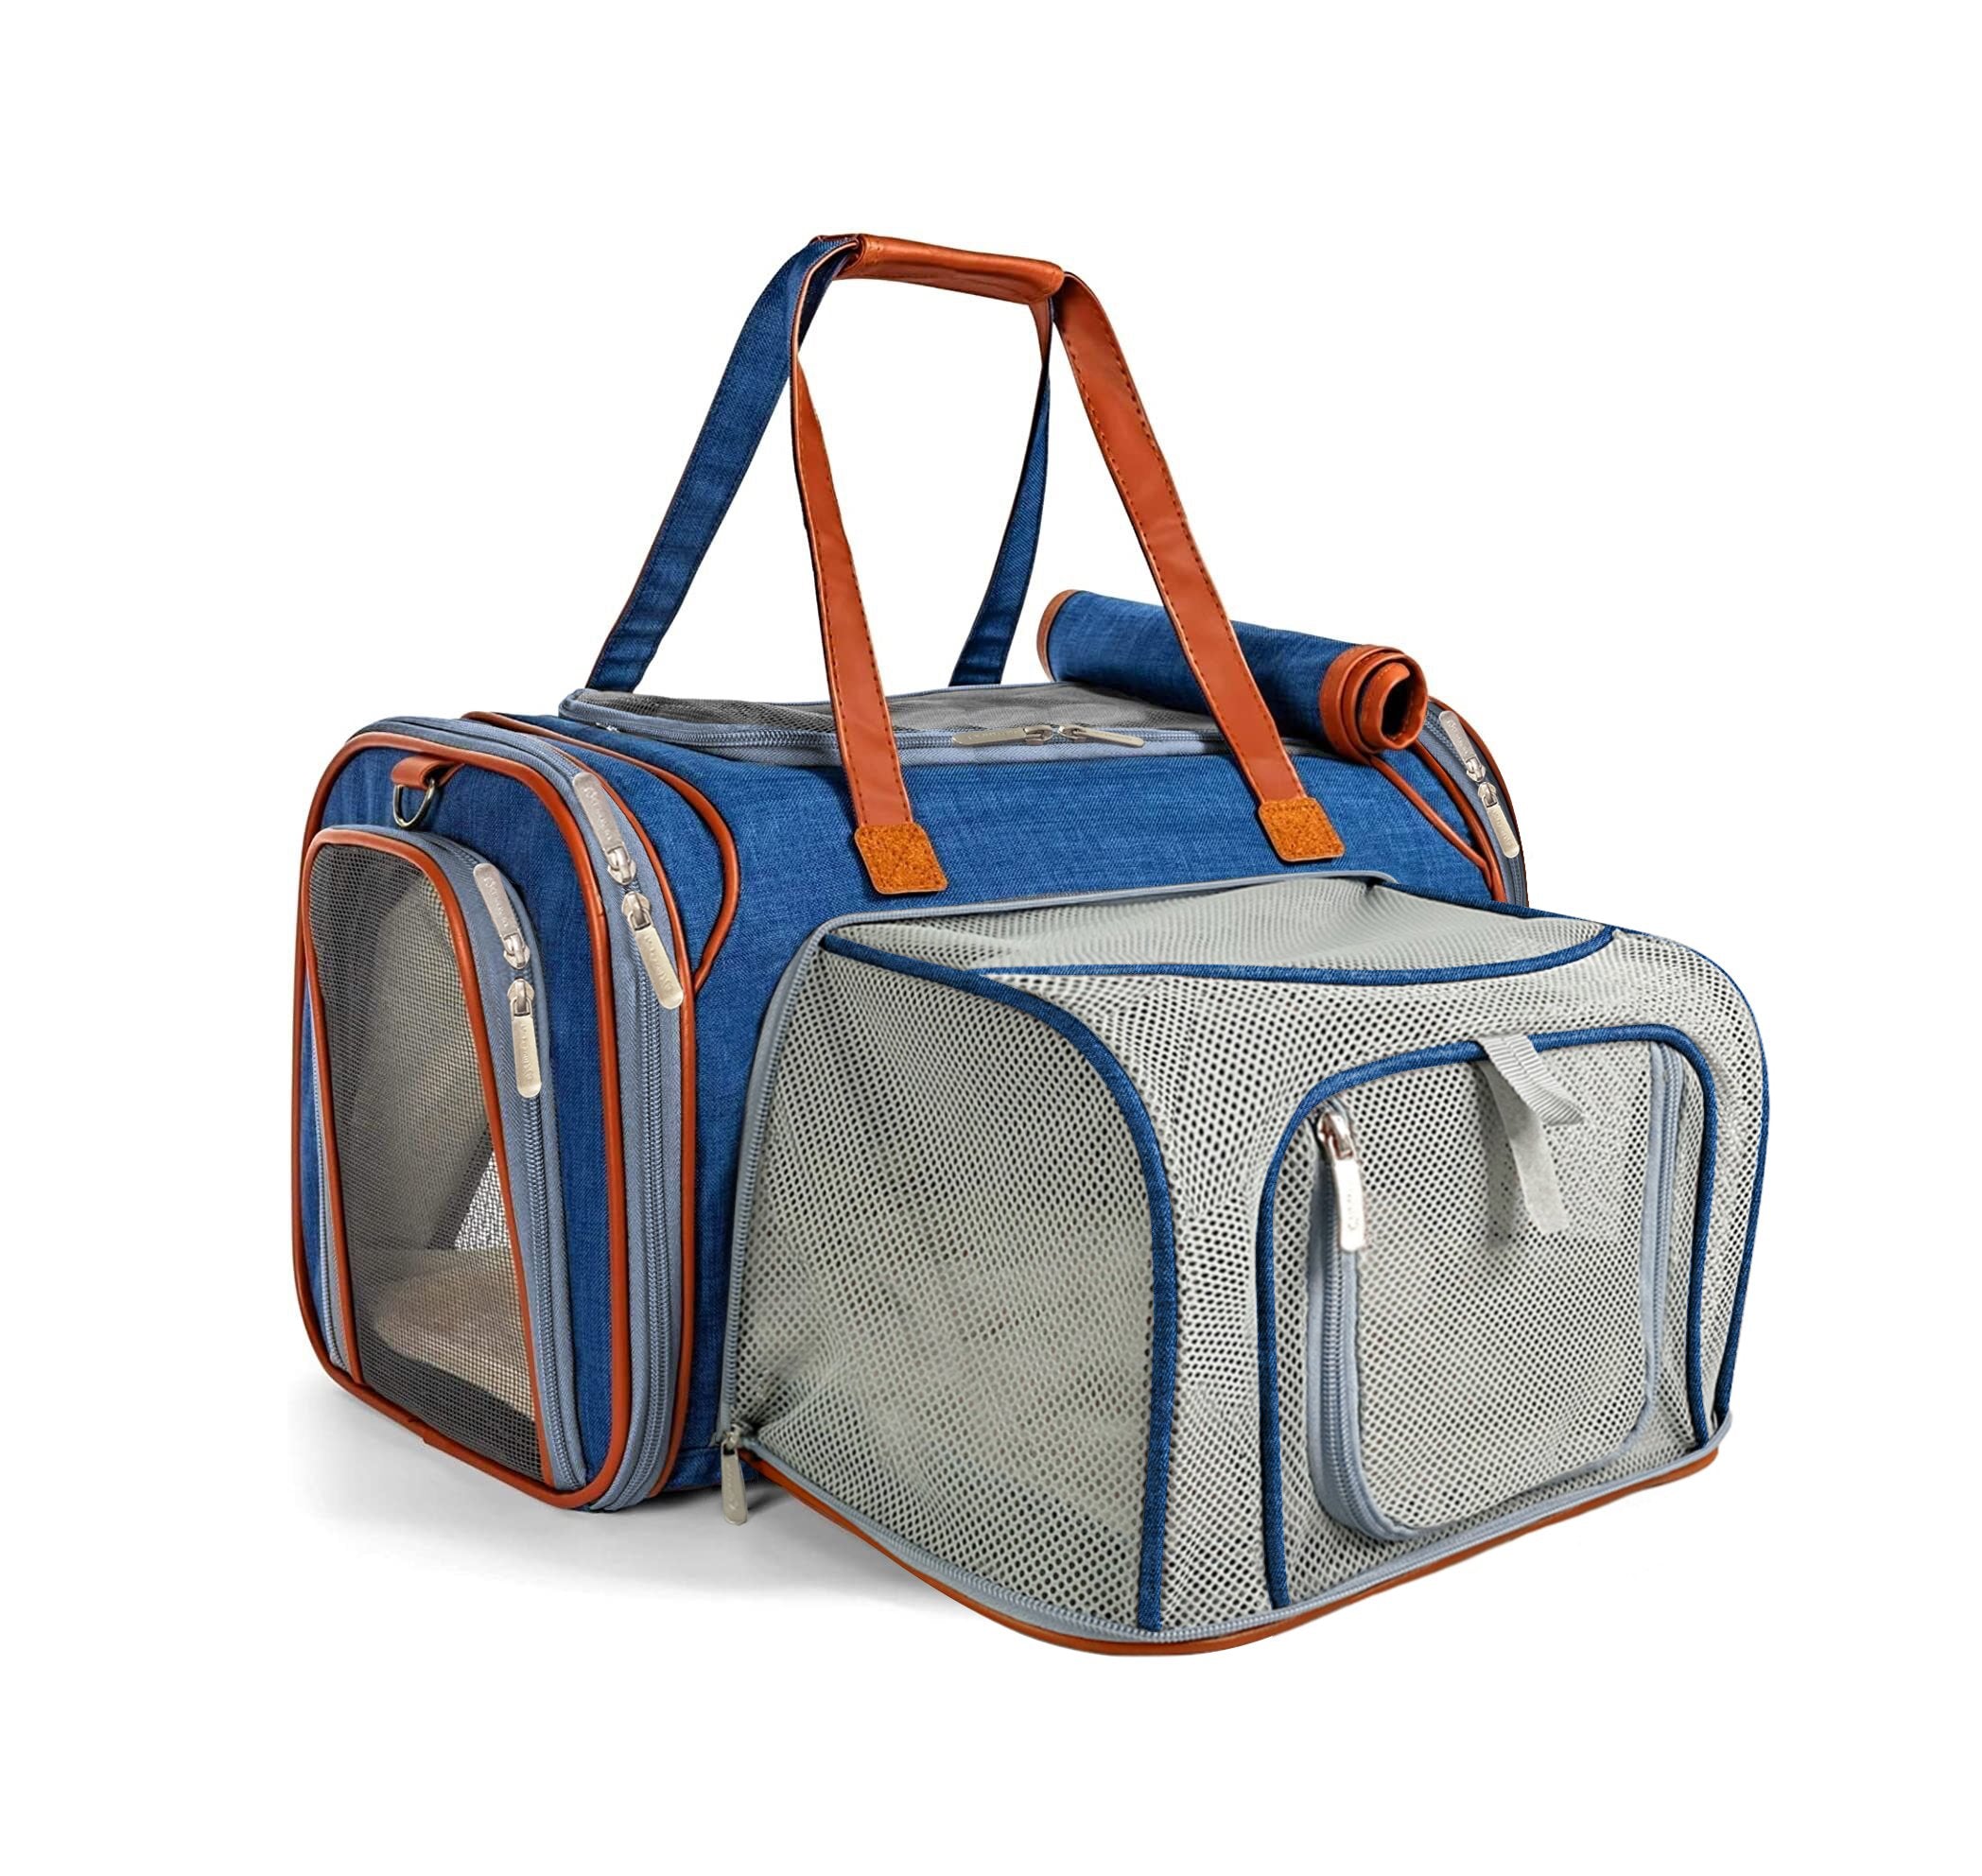 Luxury Pet Carrier, Dog Carrier, Cat Carrier Bag, Waterproof